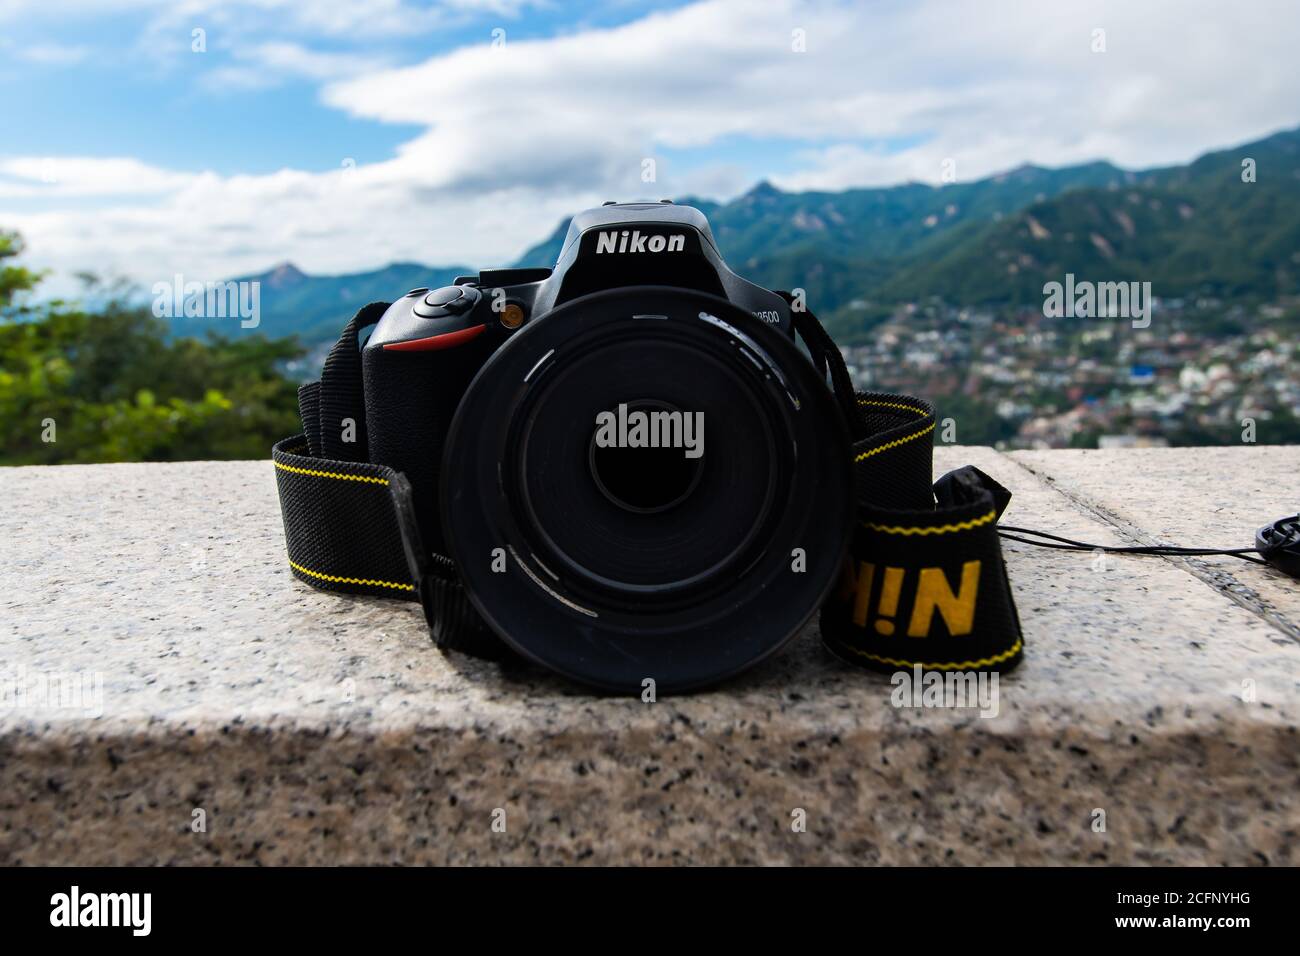 Nikon d3500 fotografías e imágenes de alta resolución - Alamy